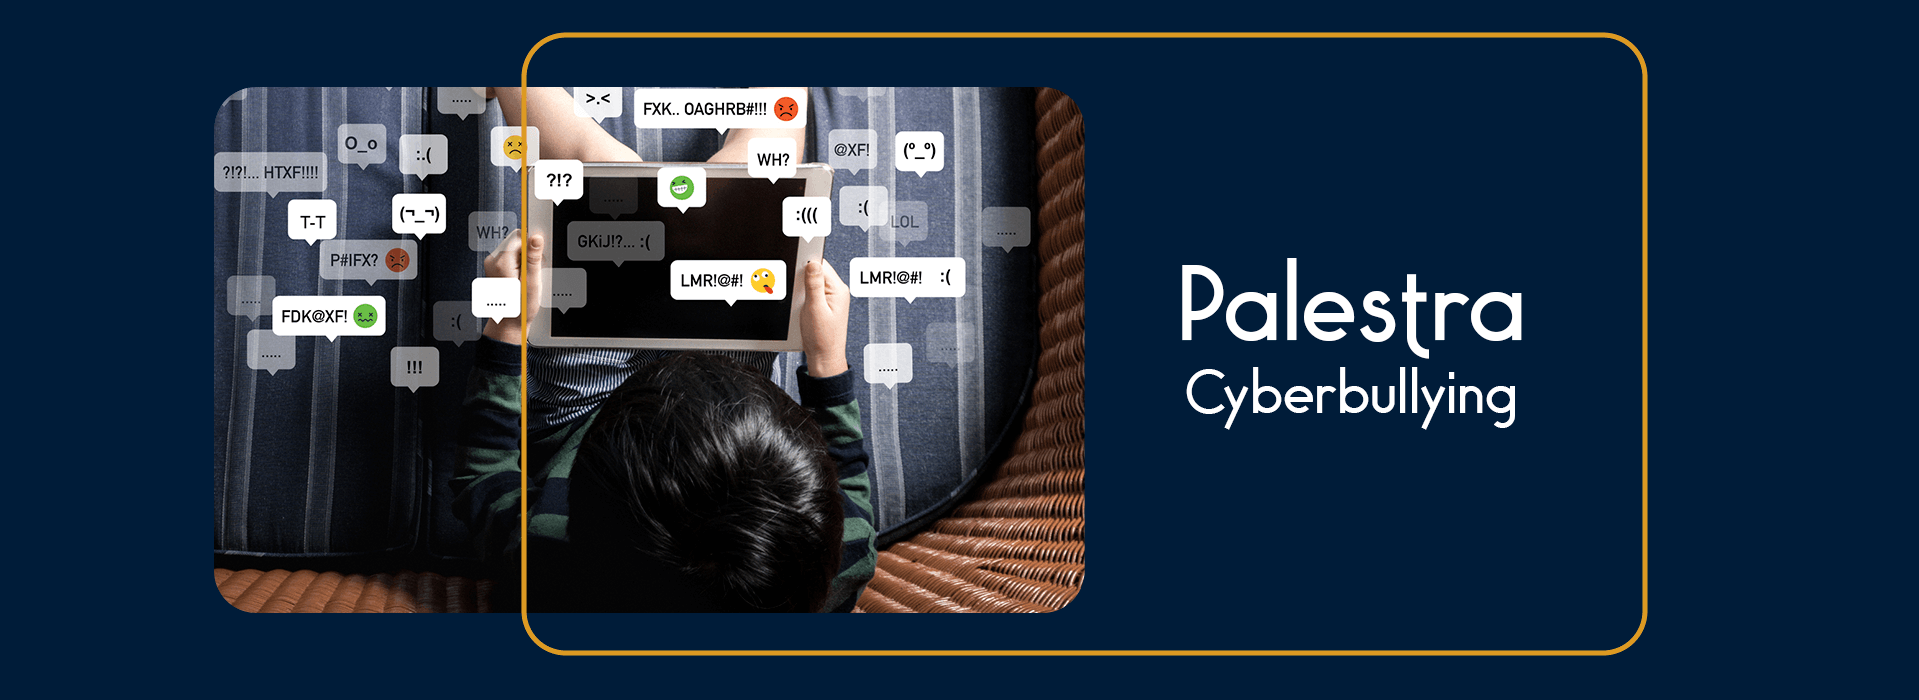 Palestra Cyberbullying - Capa